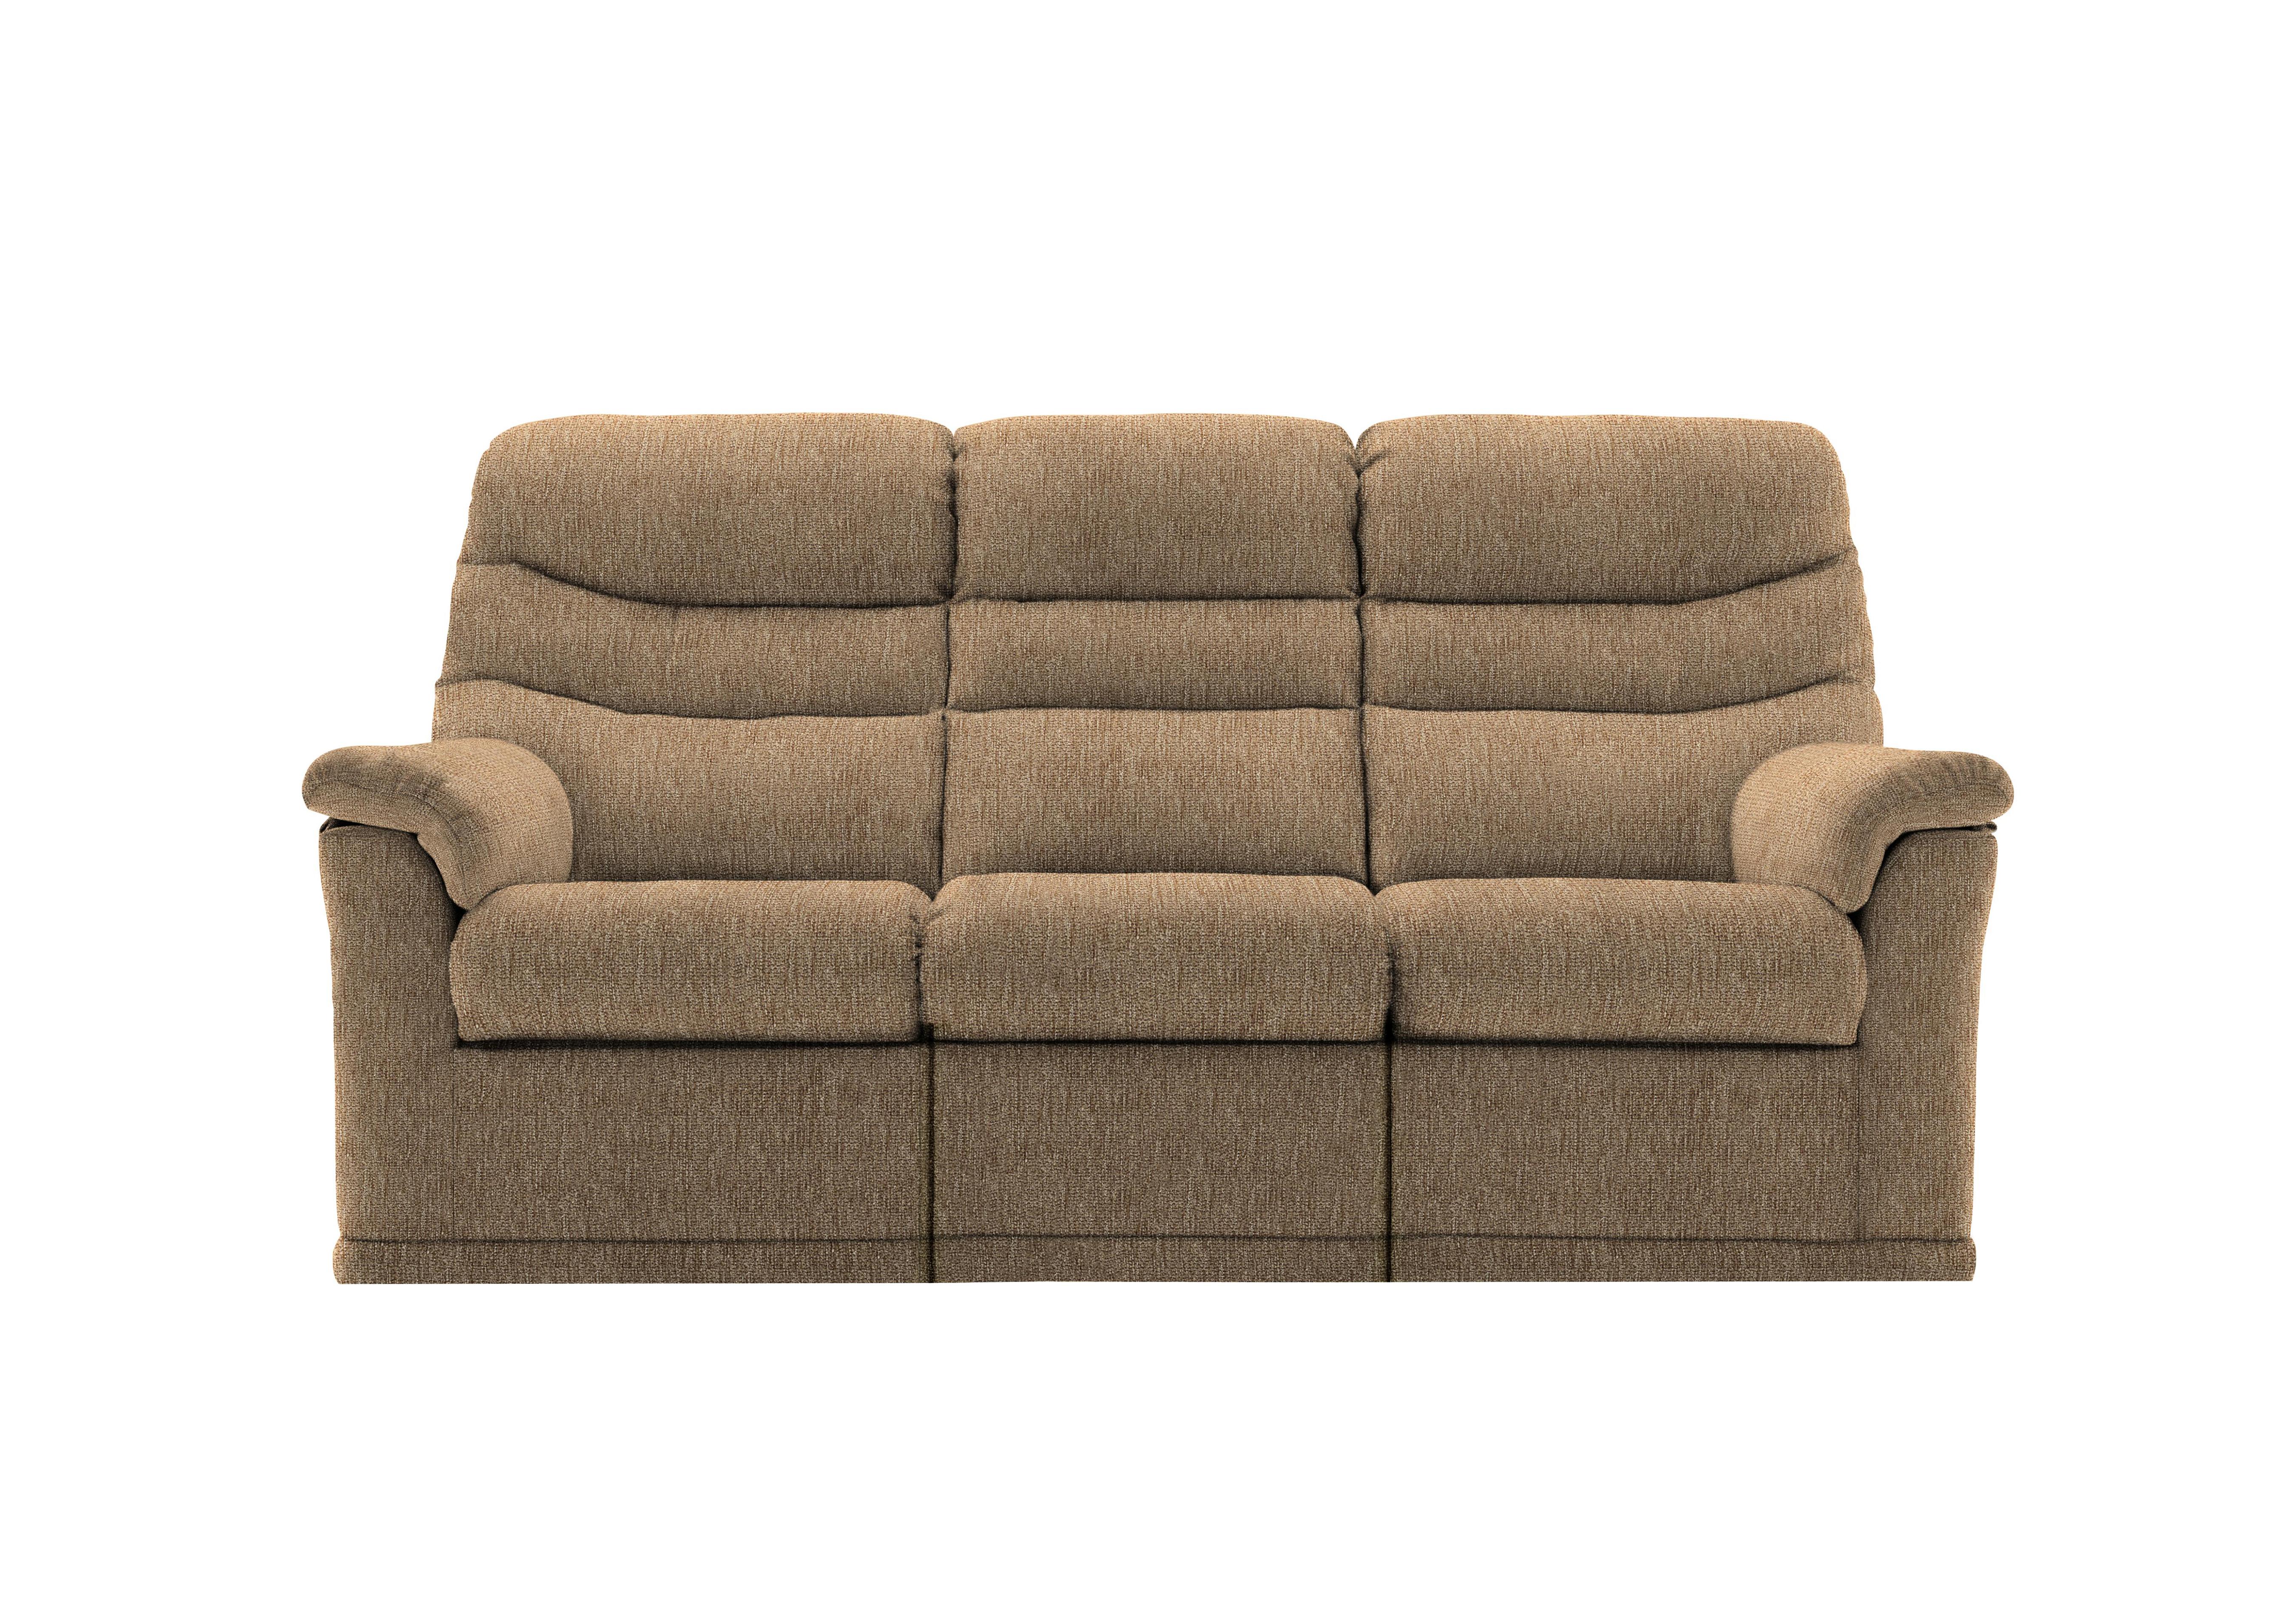 Malvern 3 Seater Fabric Sofa in A070 Boucle Cocoa on Furniture Village